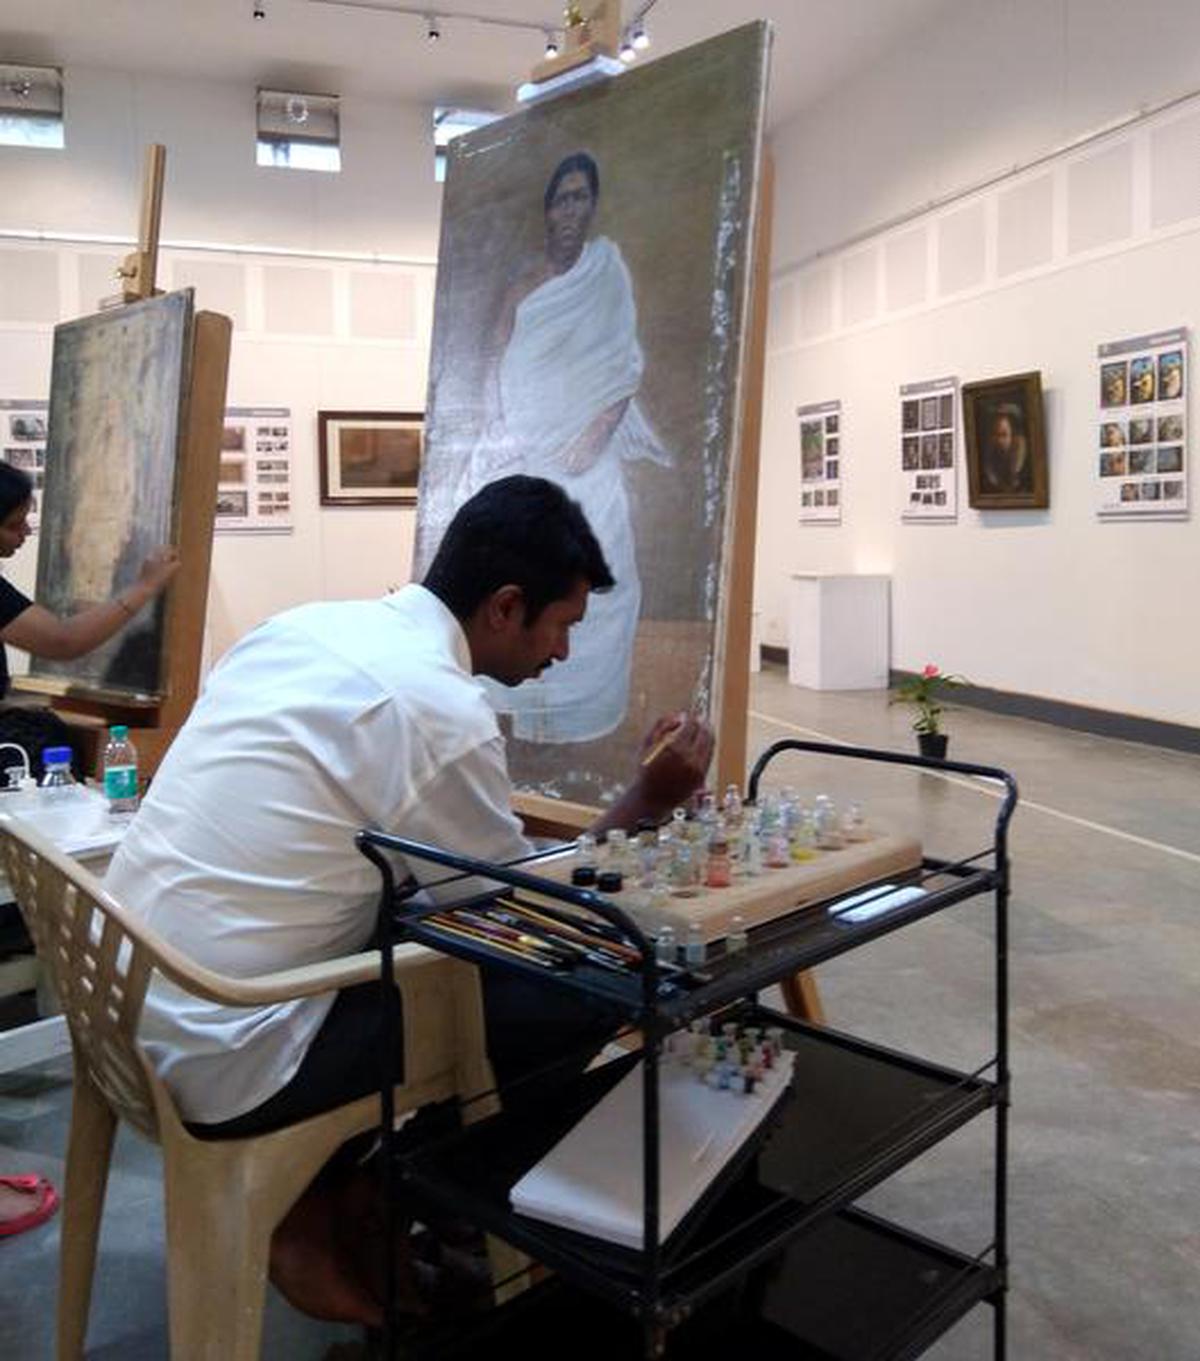 Demand for fine arts, visual arts courses shoots up in Bengaluru - The Hindu